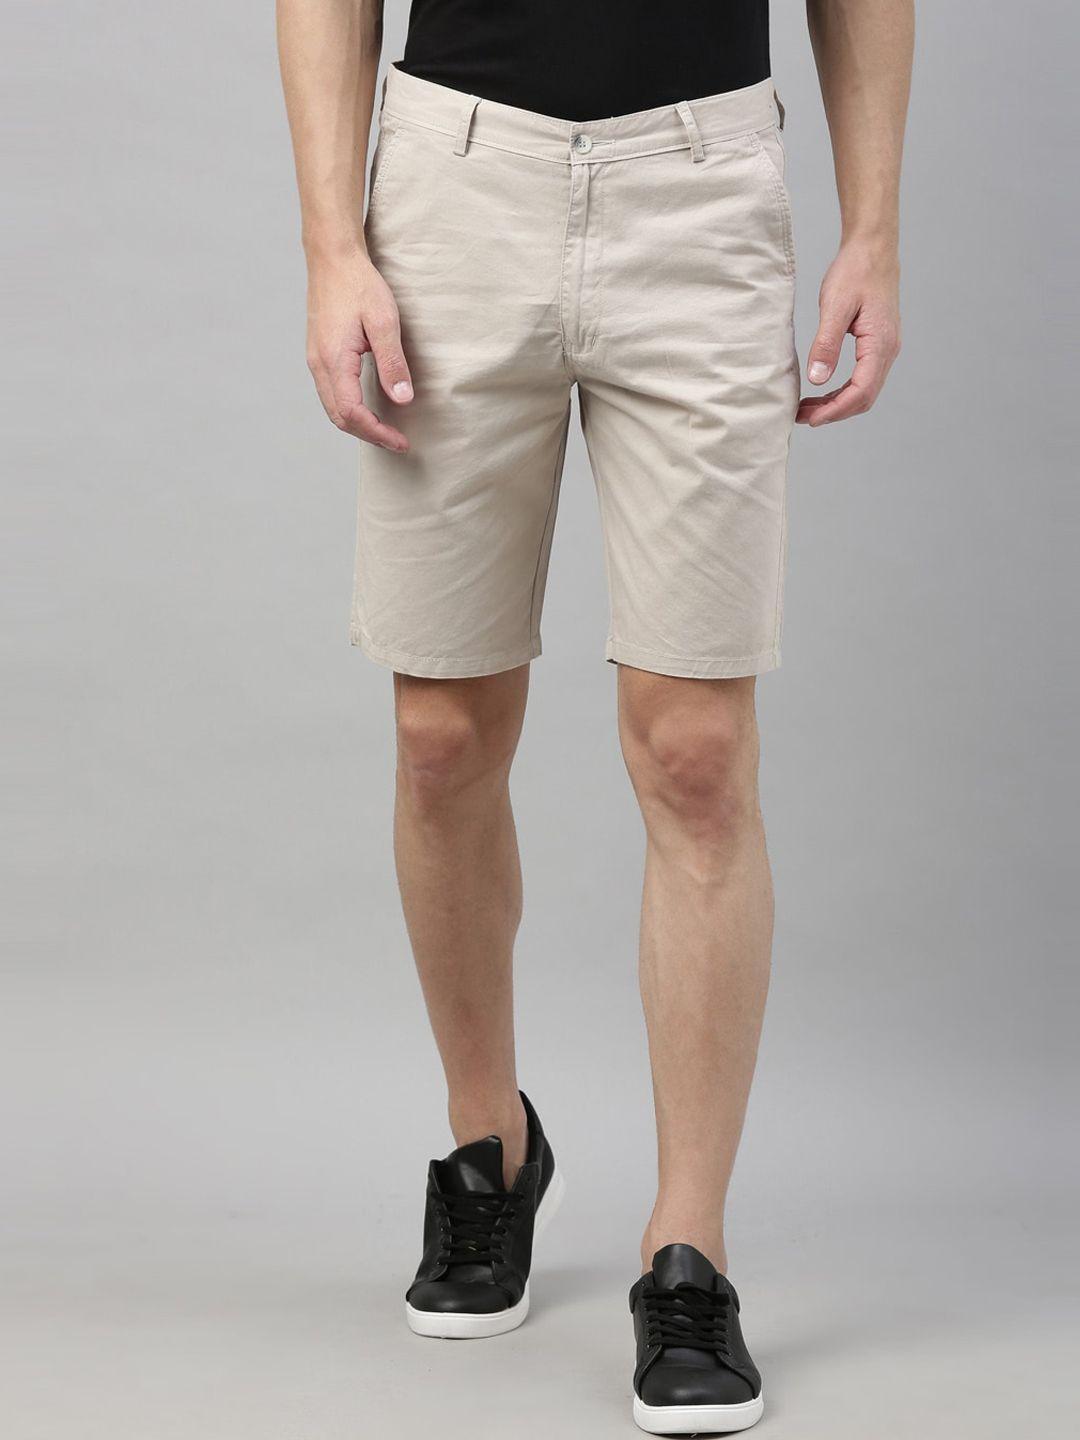 bushirt men cream-coloured pure cotton chino shorts